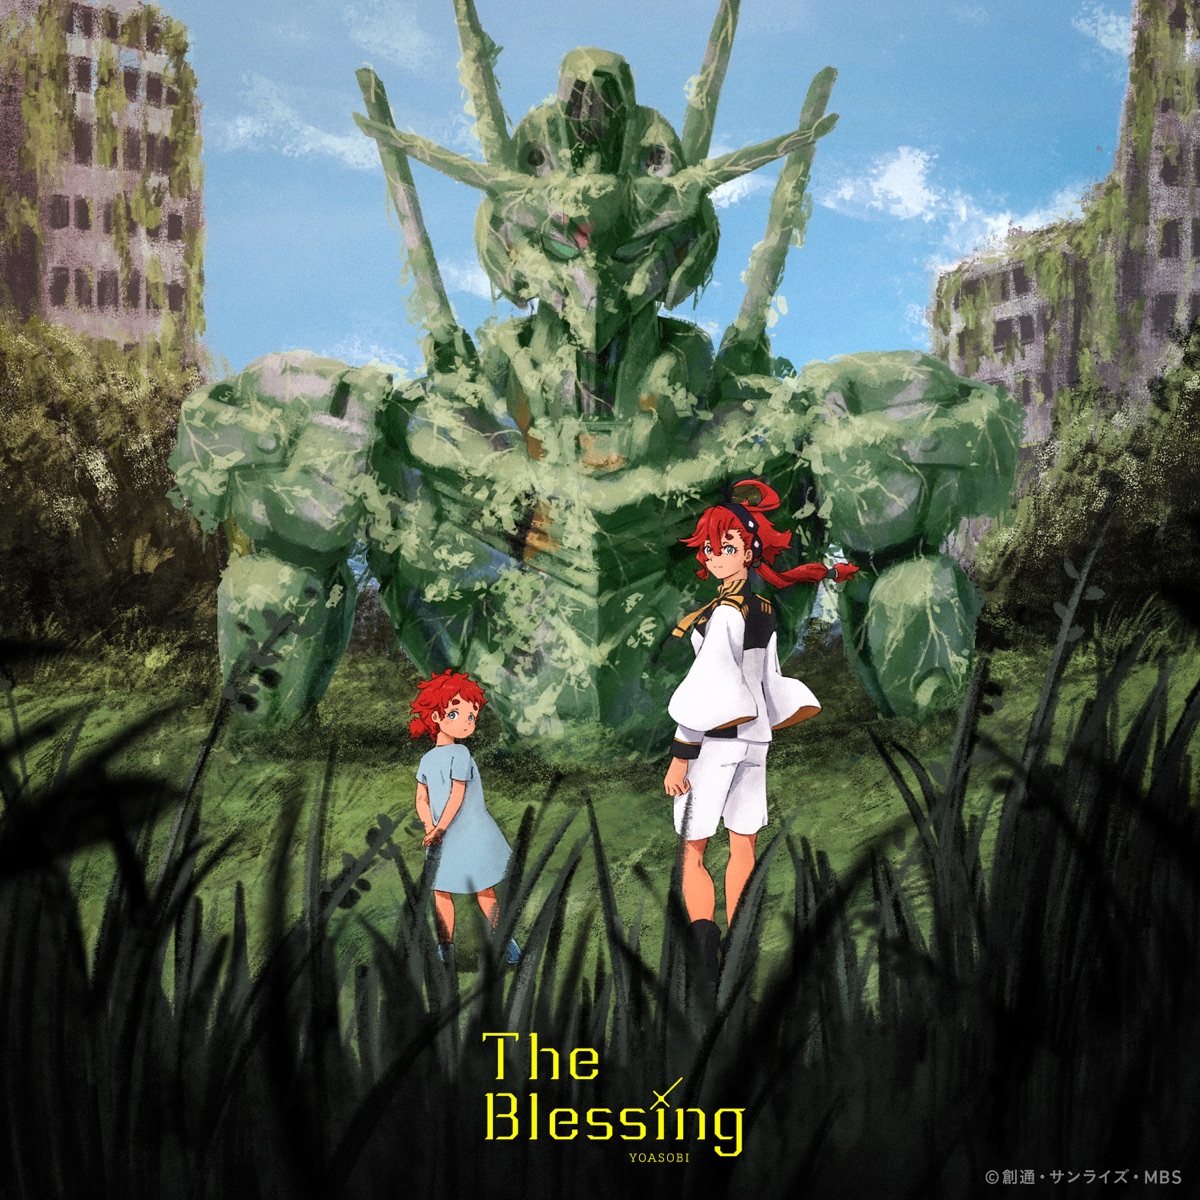 『YOASOBI - The Blessing』収録の『The Blessing』ジャケット